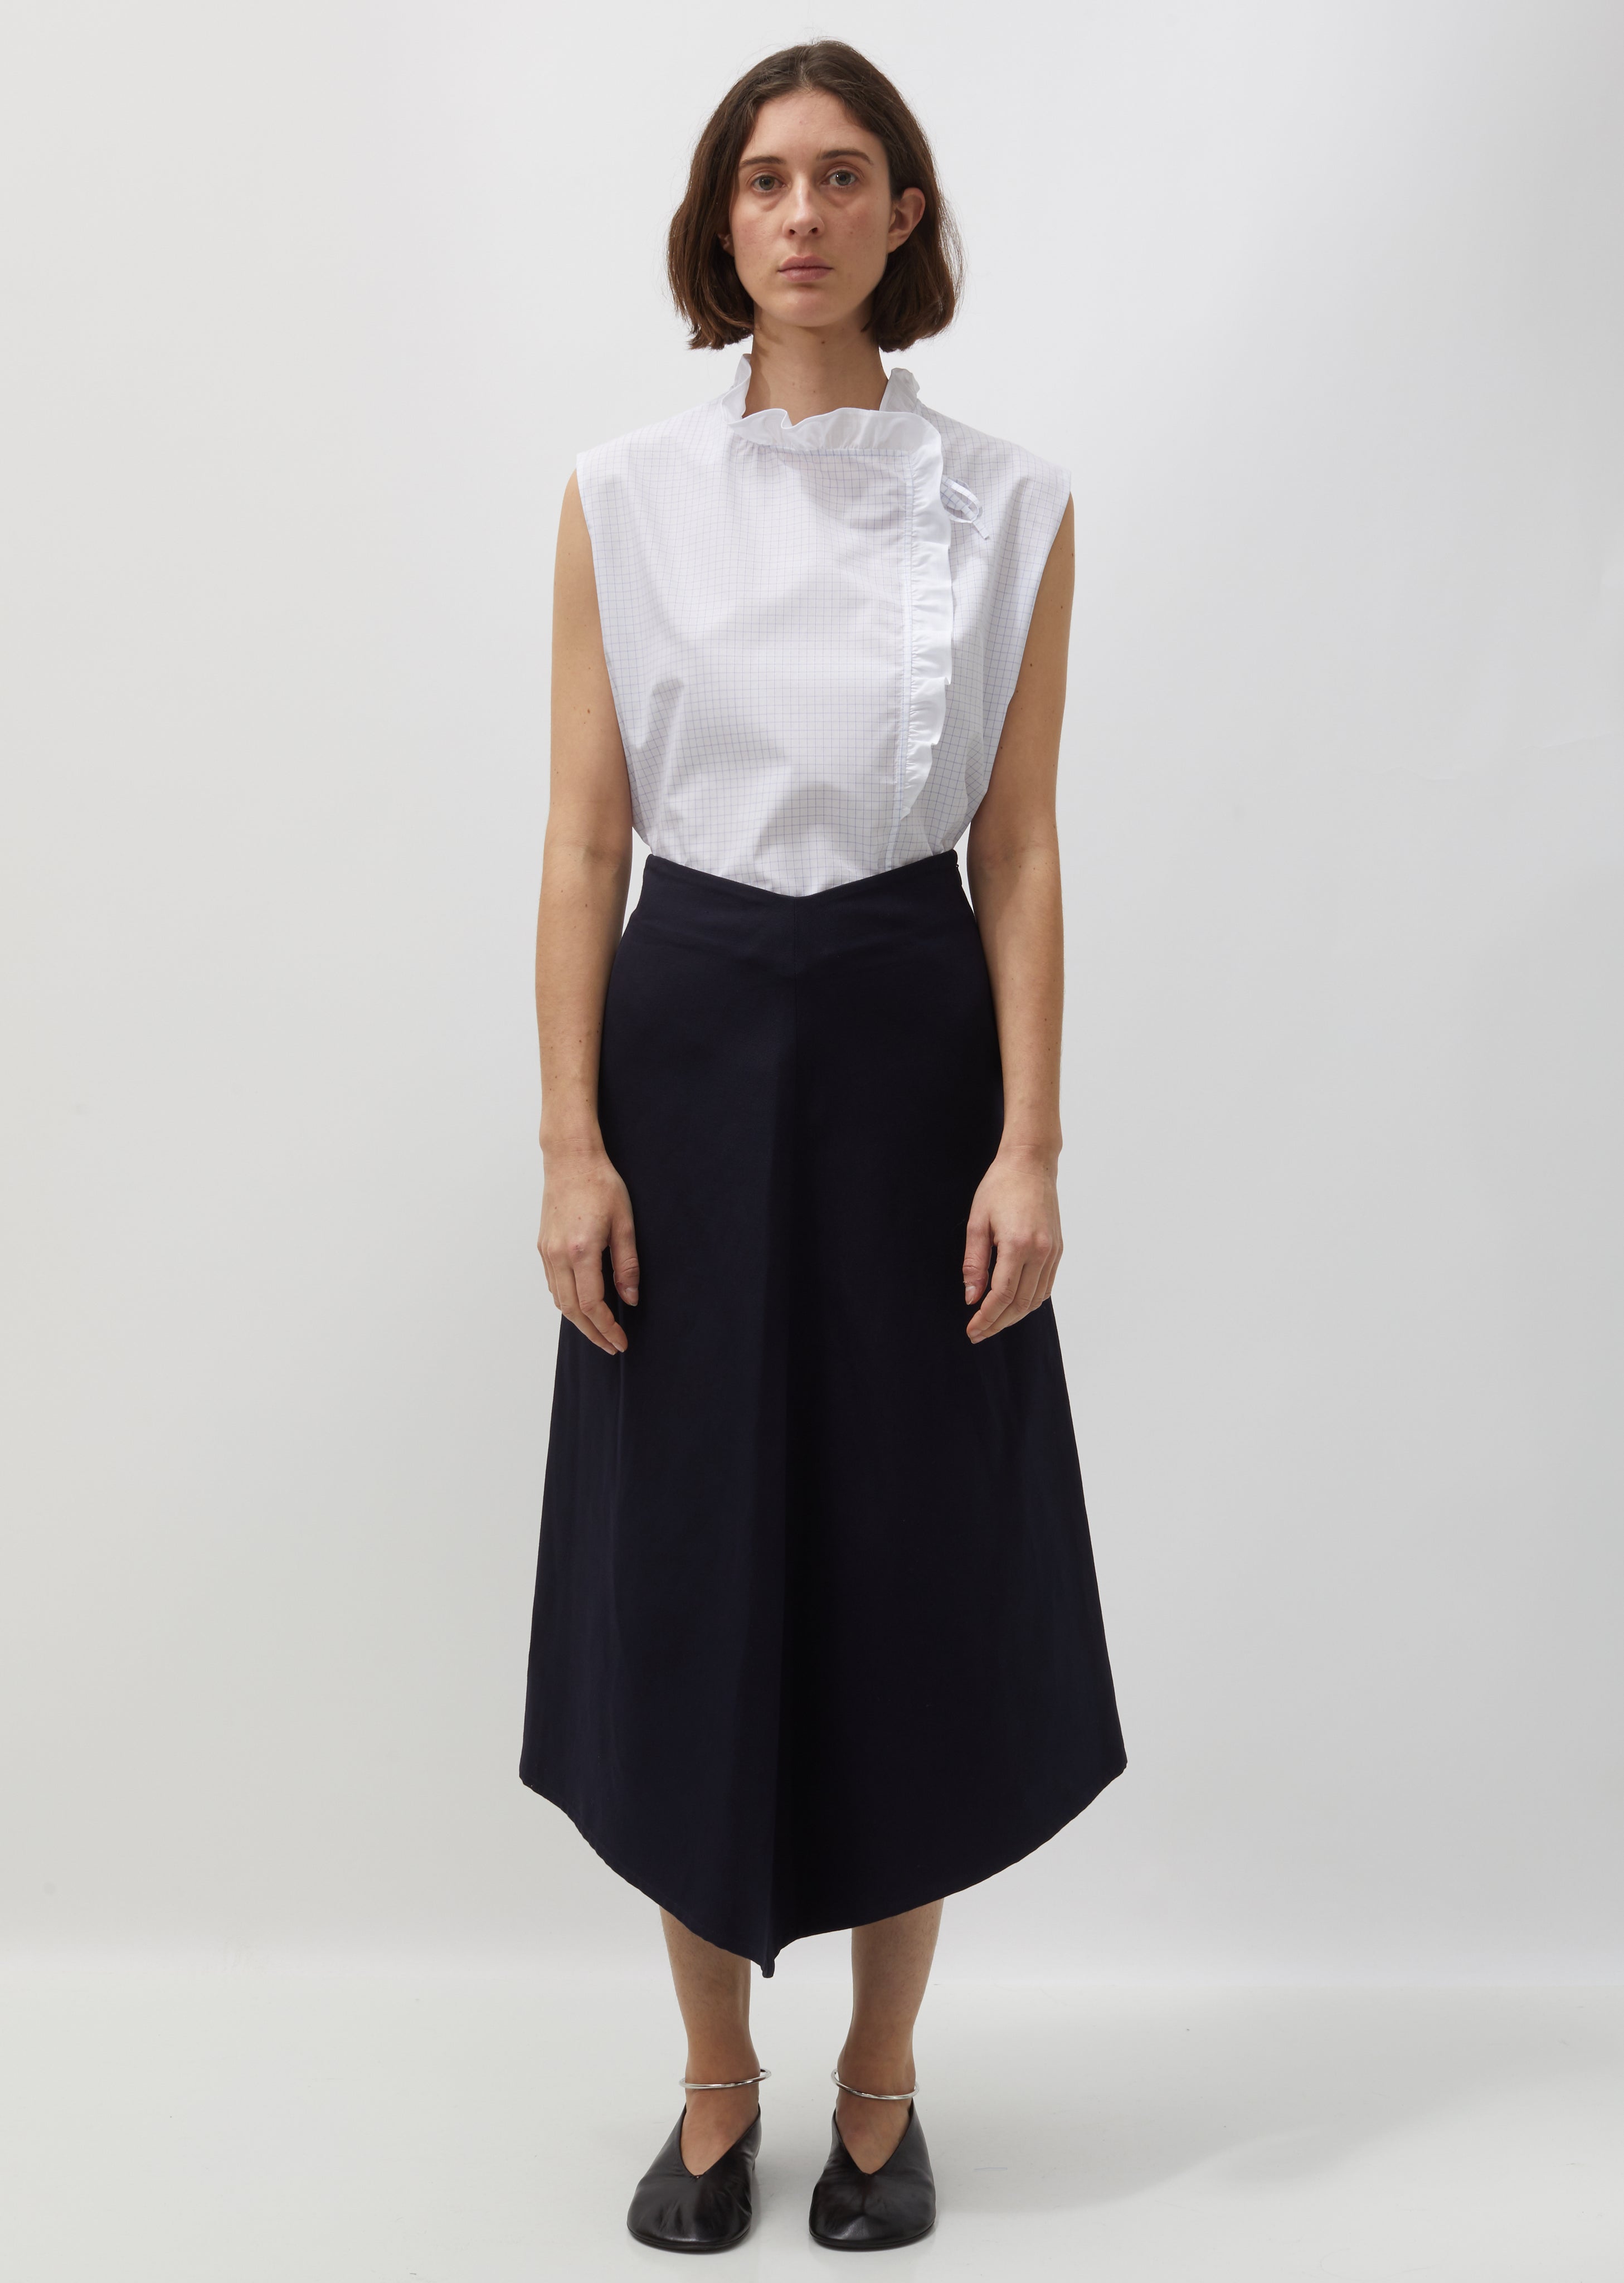 High Waisted Maxi Skirt - Broadcloth Double Slits Skirts Women Fashion  Clothing | eBay